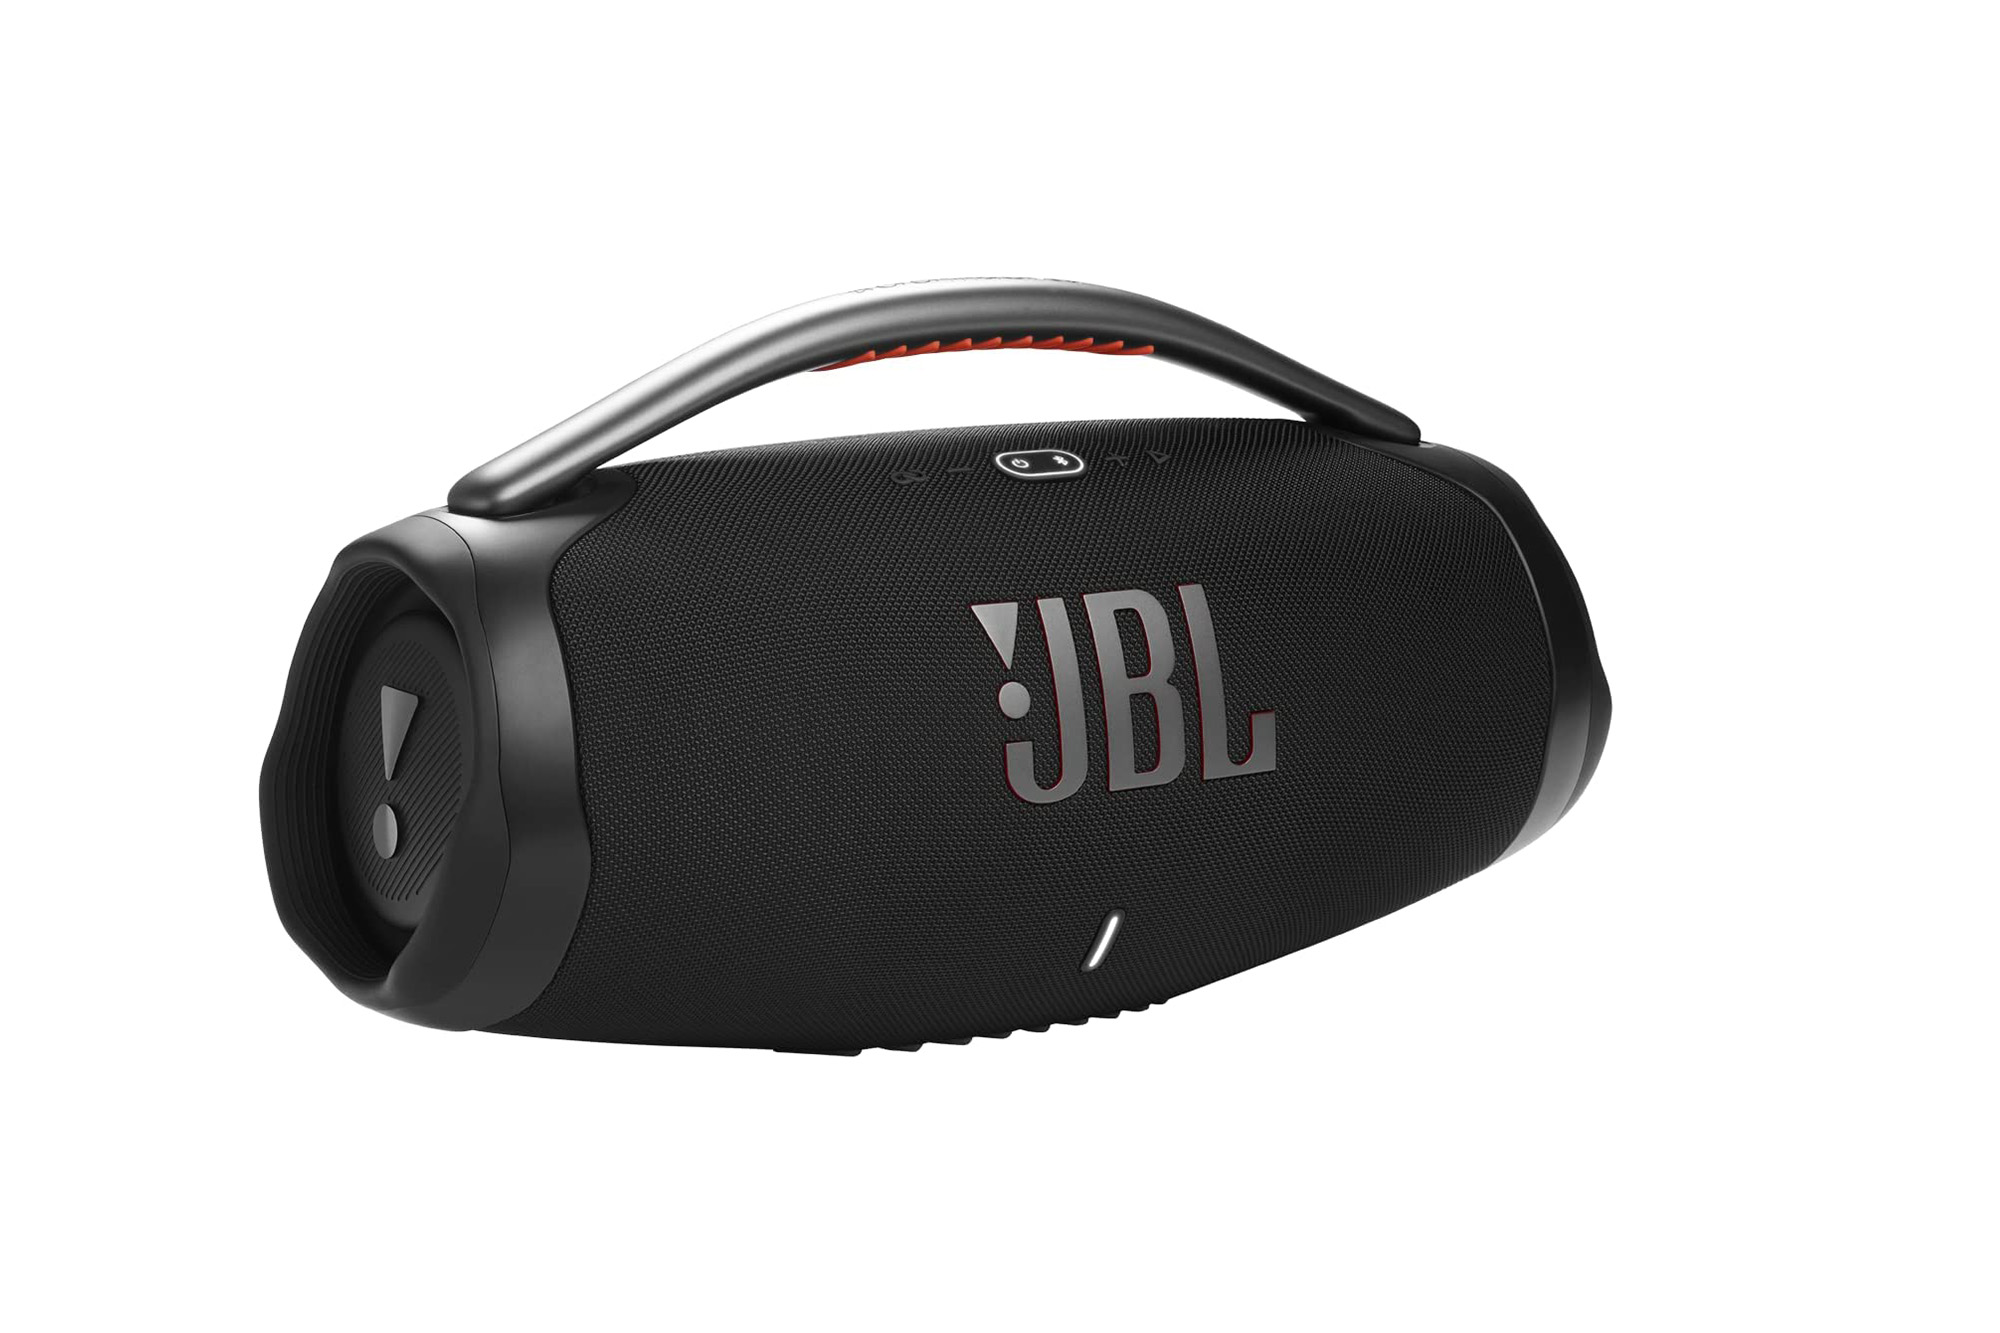 A black JBL portable speaker